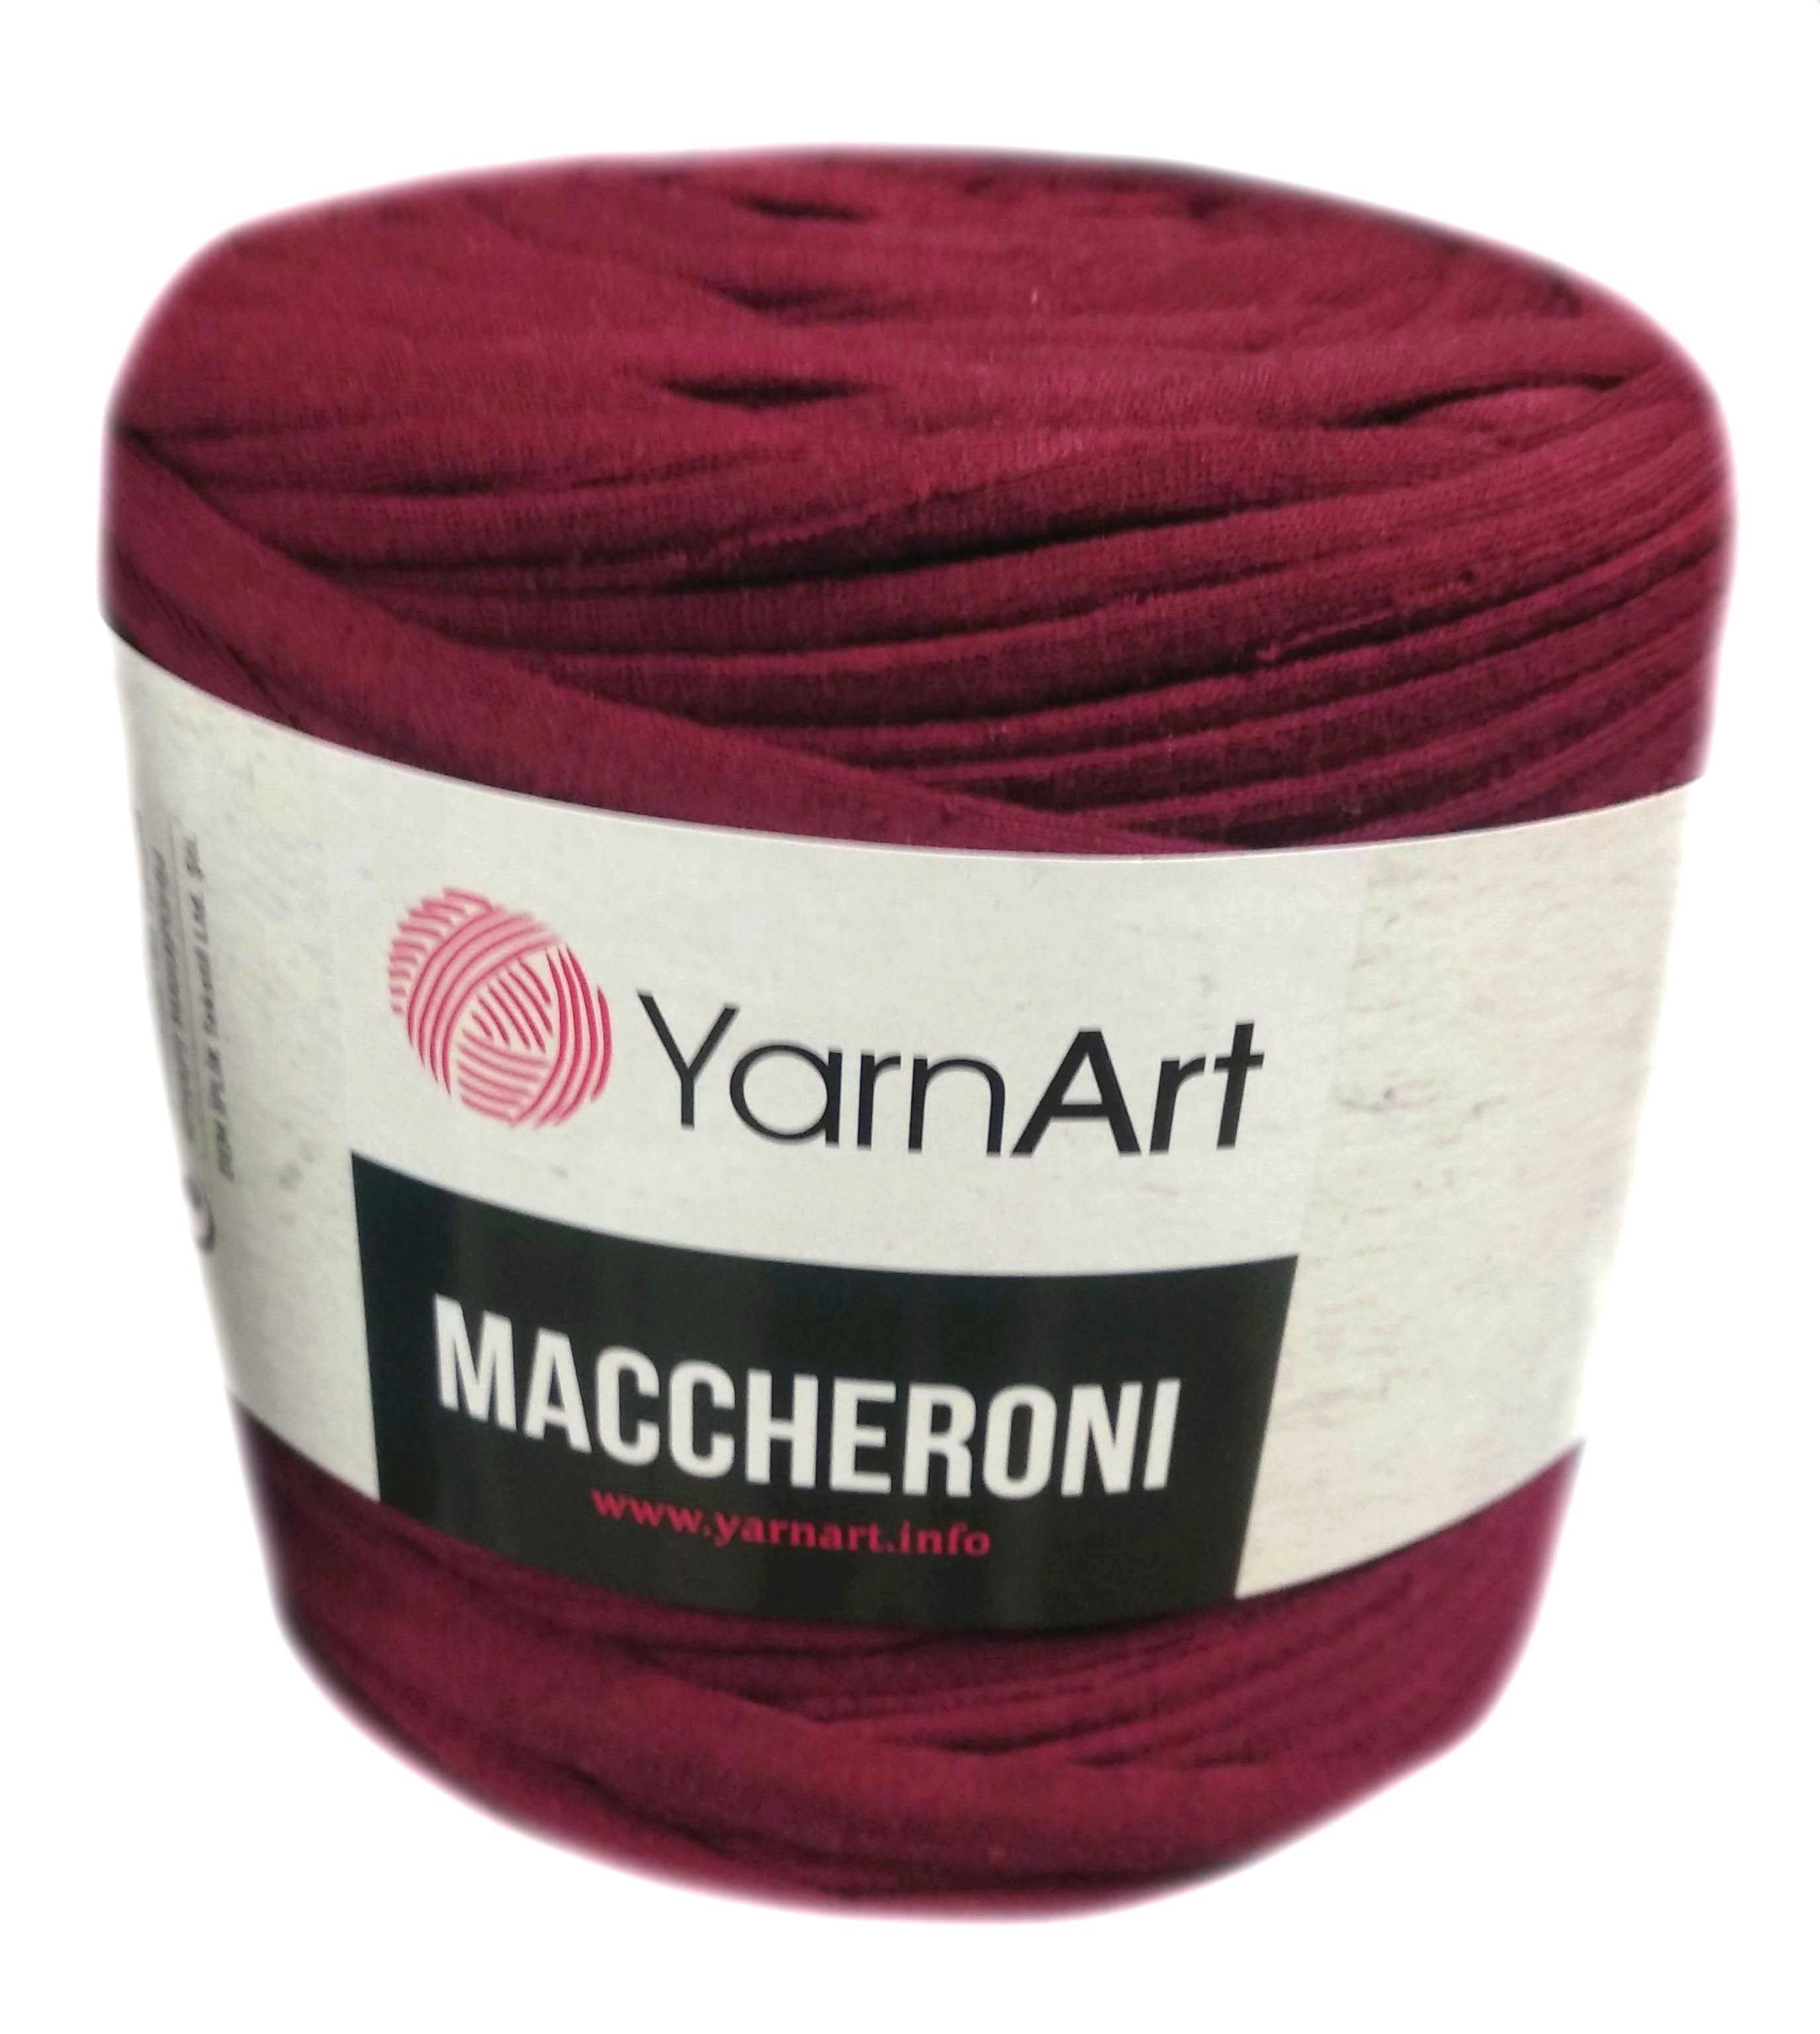 YarnArt MACCHERONI, bordó póló fonal.Tű 12-15 mm.